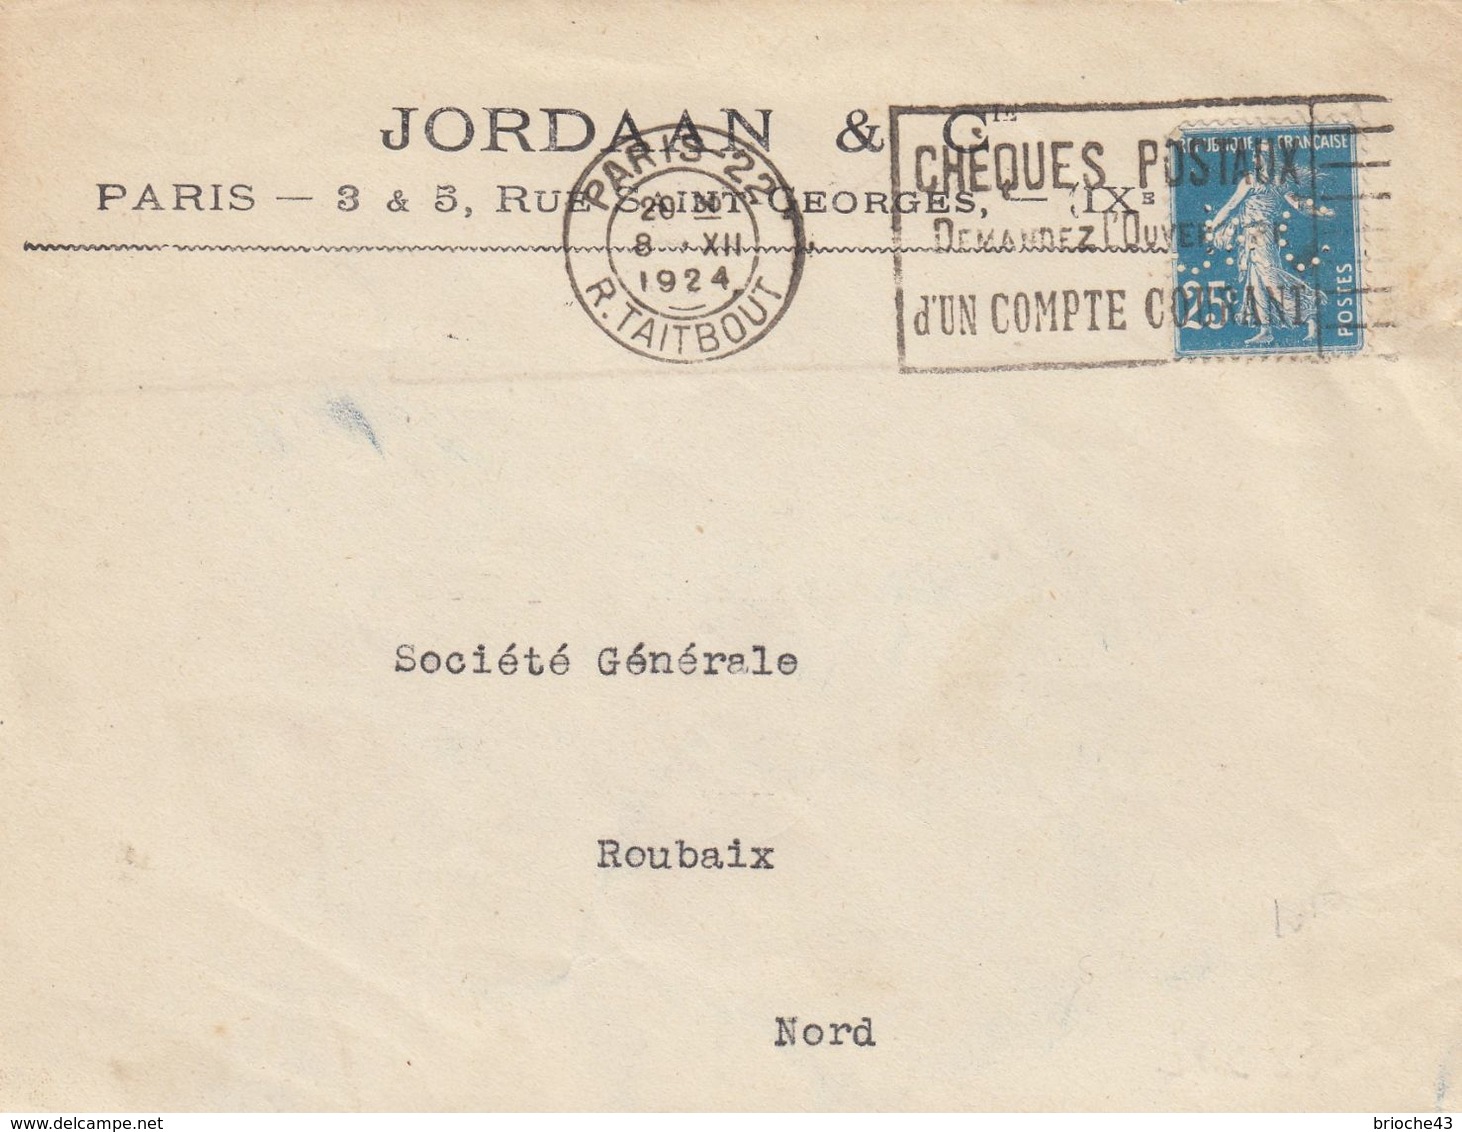 FRANCE - DEVANT DE LETTRE JORDAAN & C  - SEMEUSE 25c  PERFORE - 8.12.1924 PARIS   / 1 - 1921-1960: Periodo Moderno